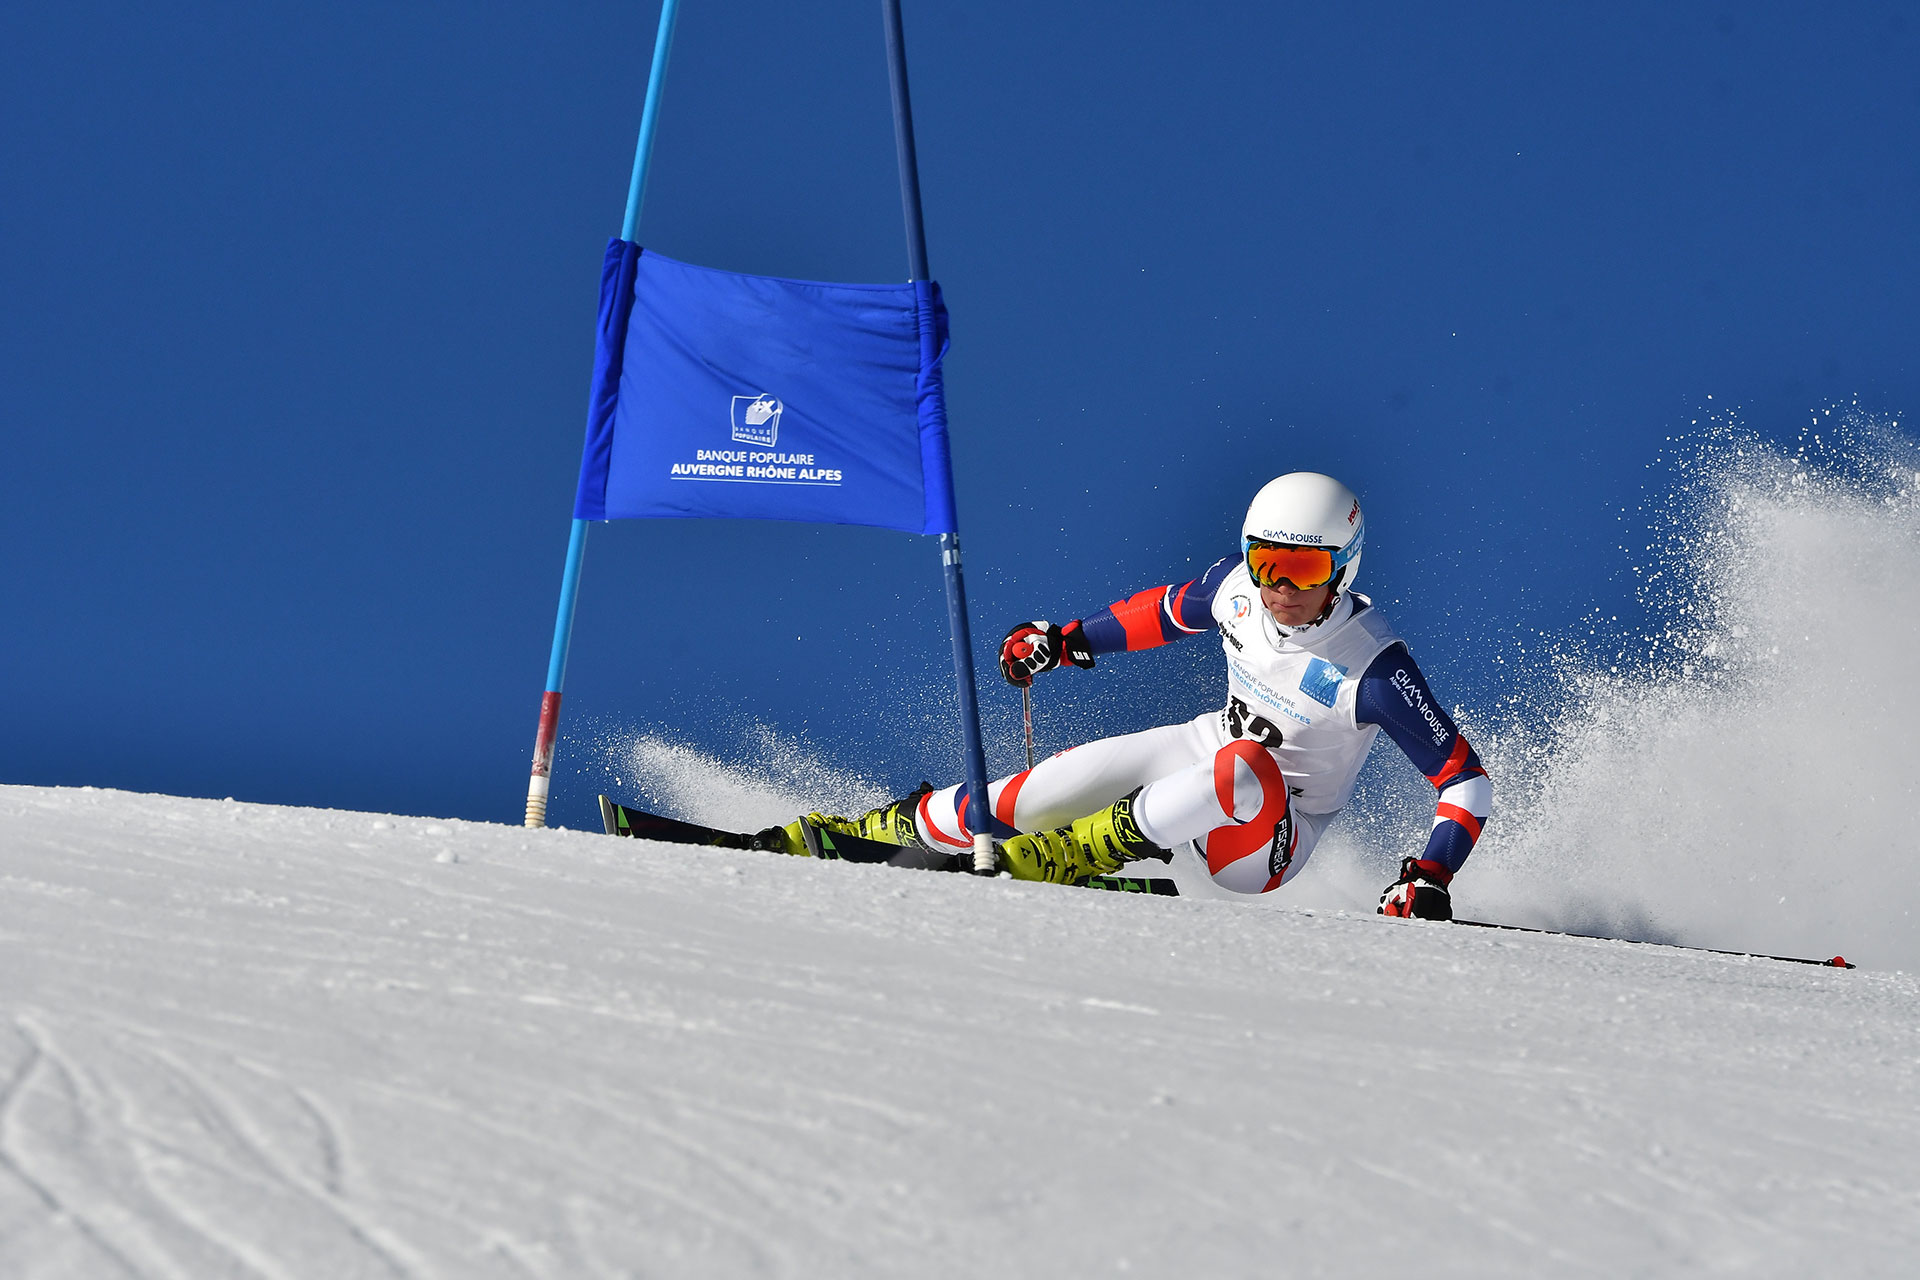 Chamrousse champion alban elezi cannaferina ski alpin slalom station montagne ski isère france - © Alban Elezi Cannaferina 